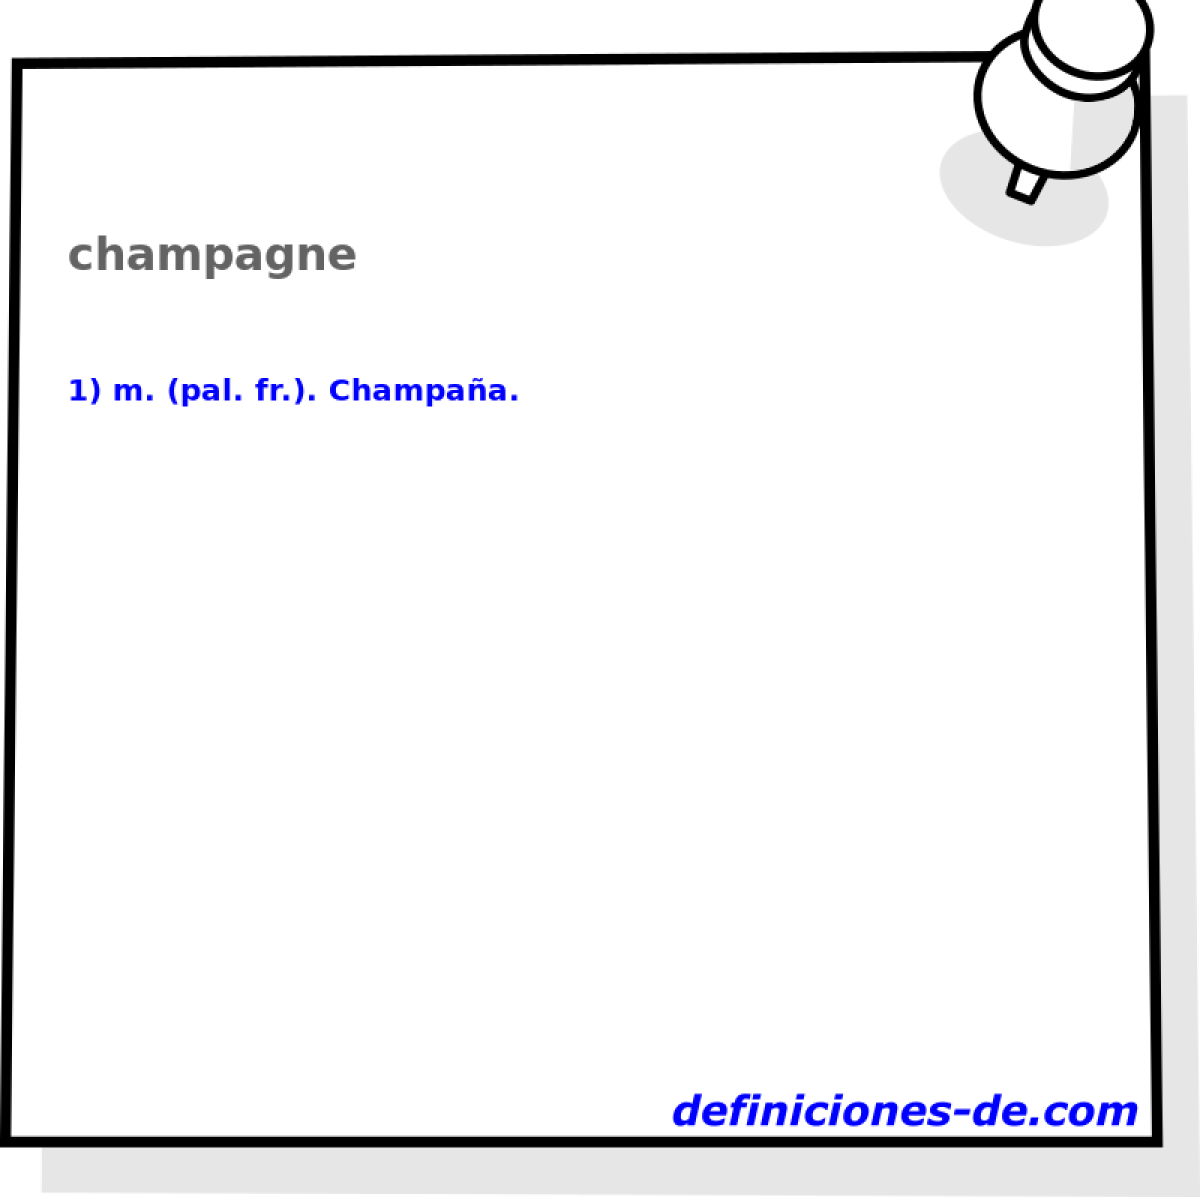 champagne 